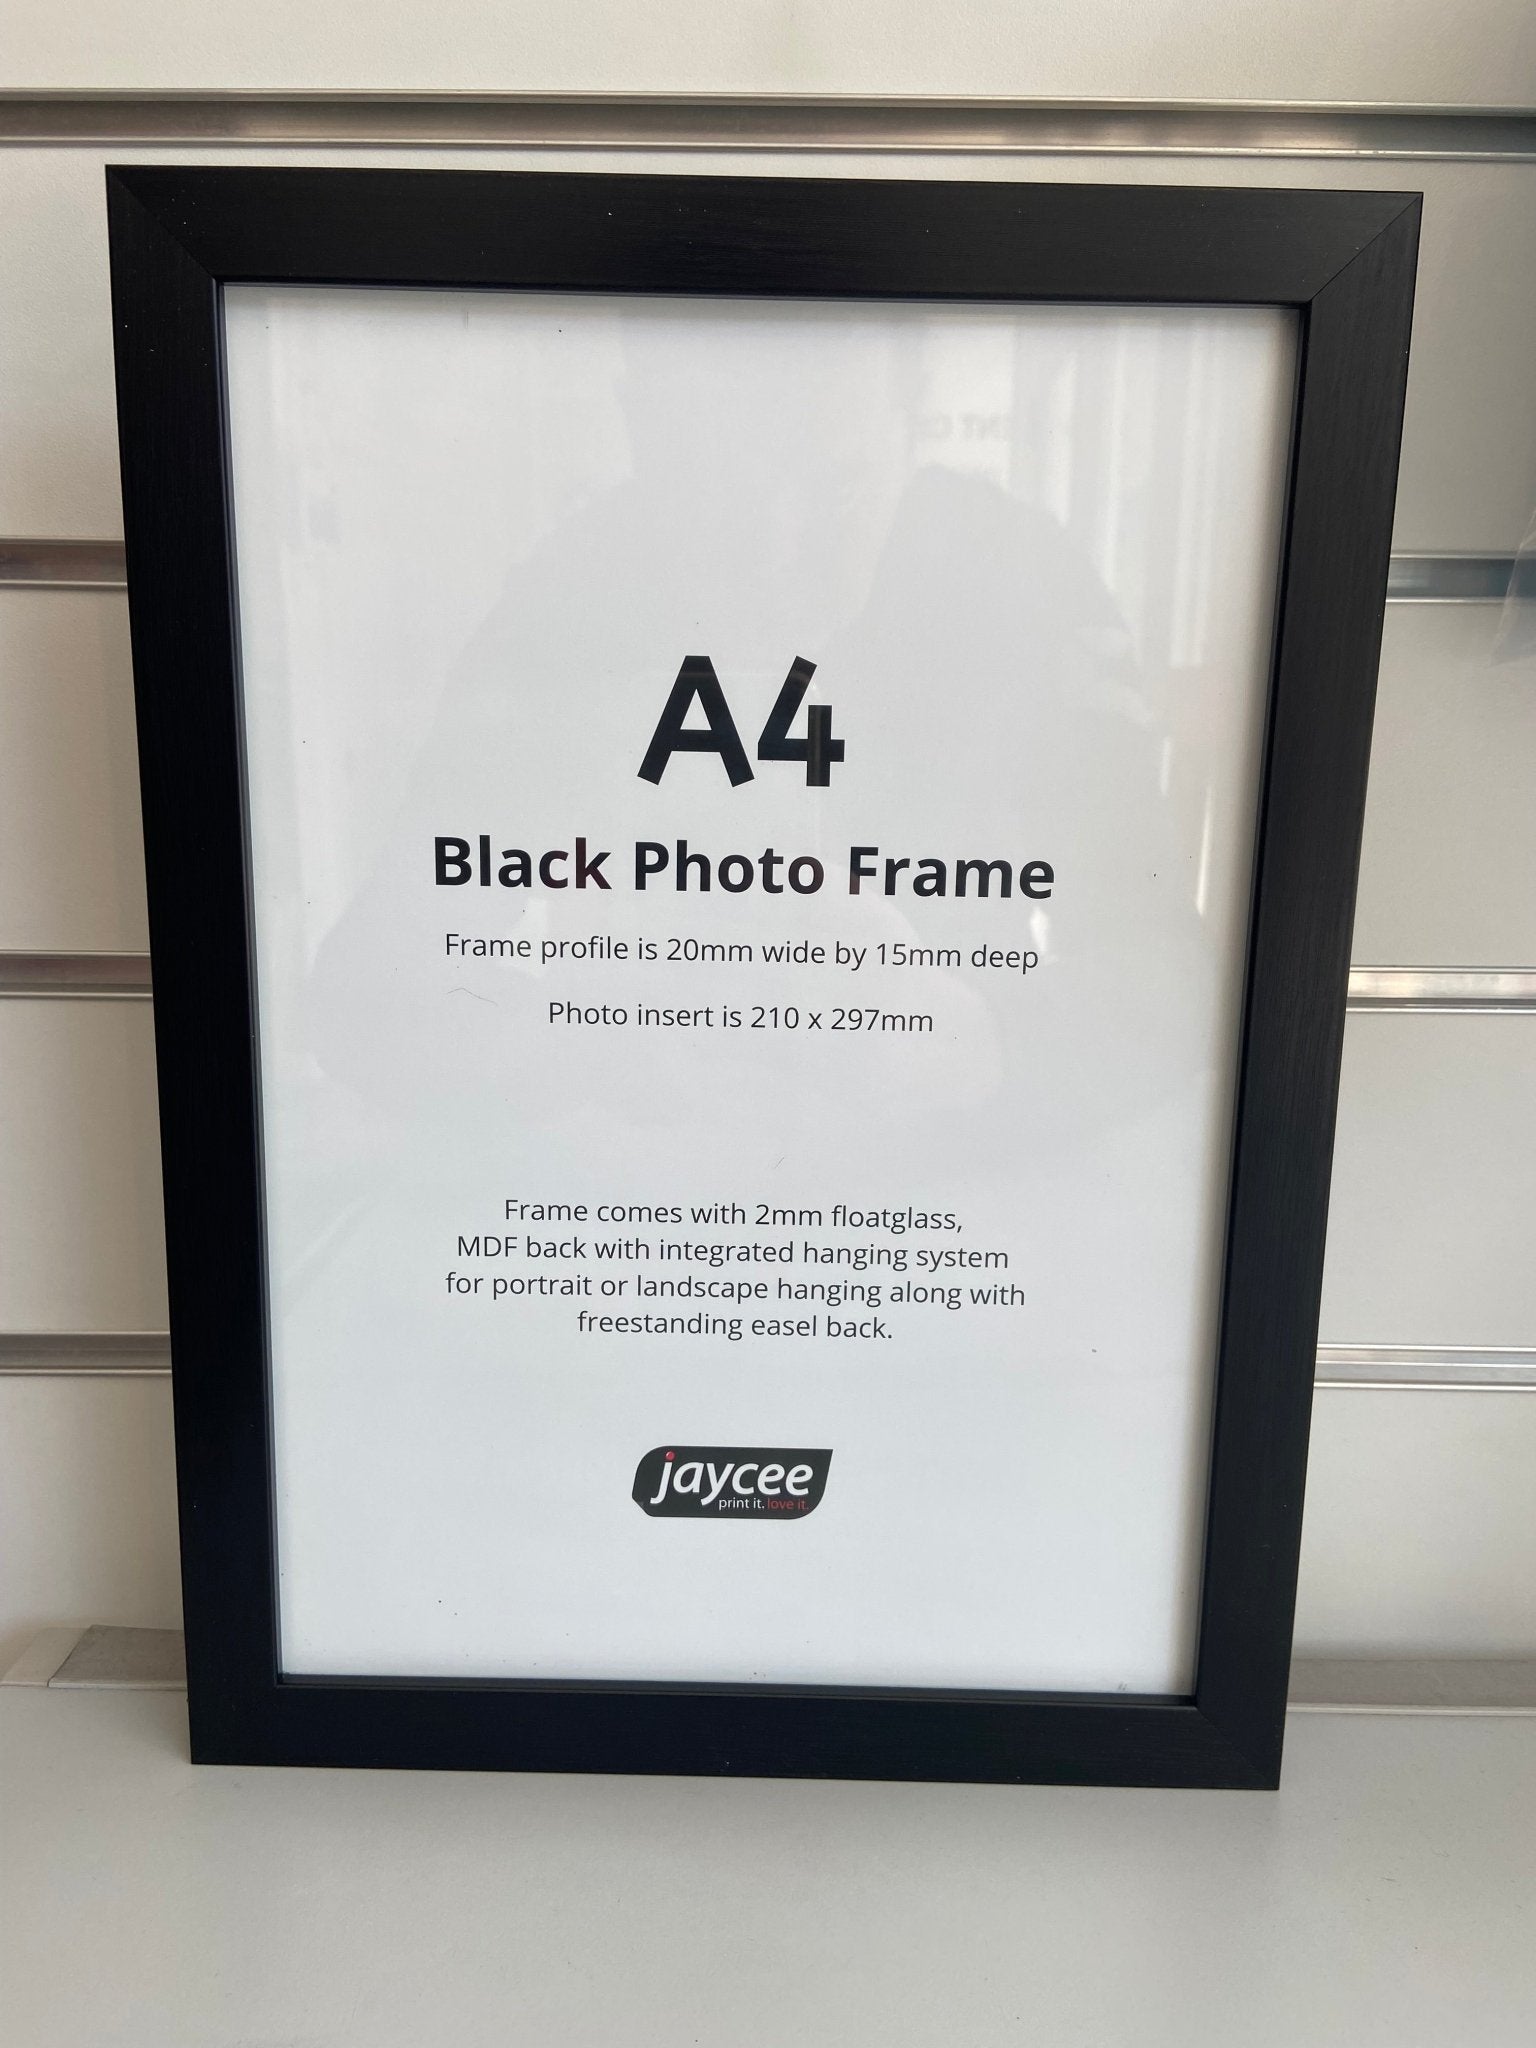 A4 Black Photo Frame - Jaycee